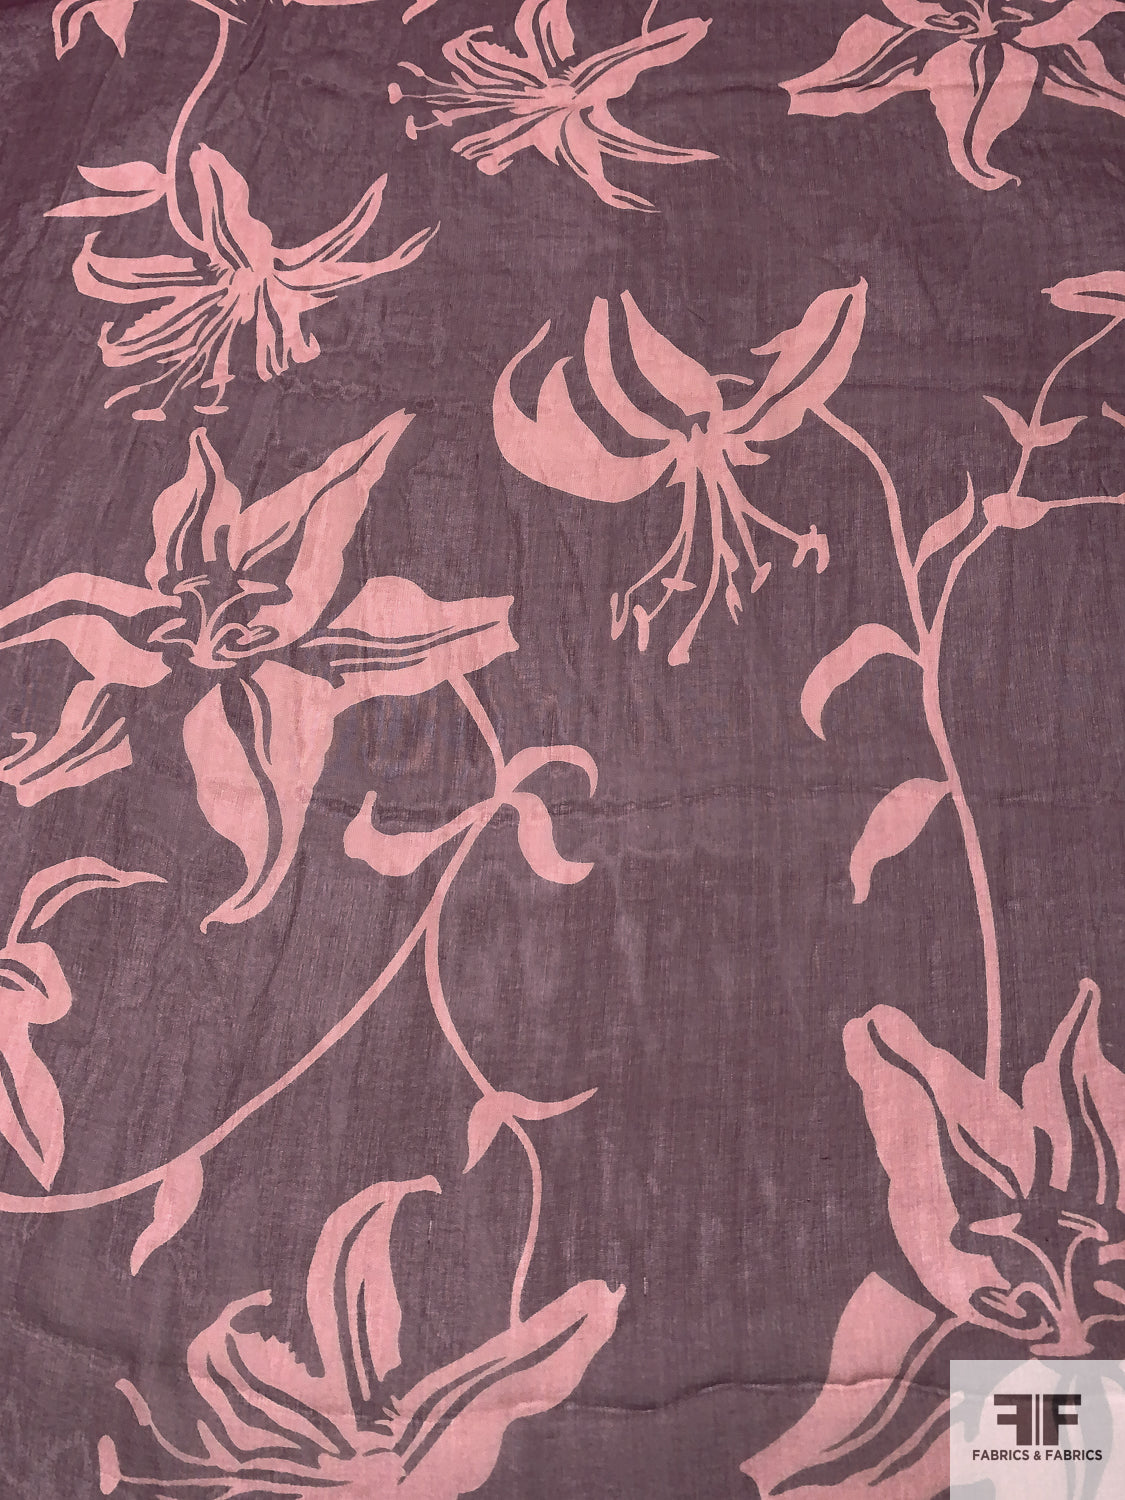 Floral Silhouette Printed Silk Chiffon - Grape Purple / Dusty Mauve